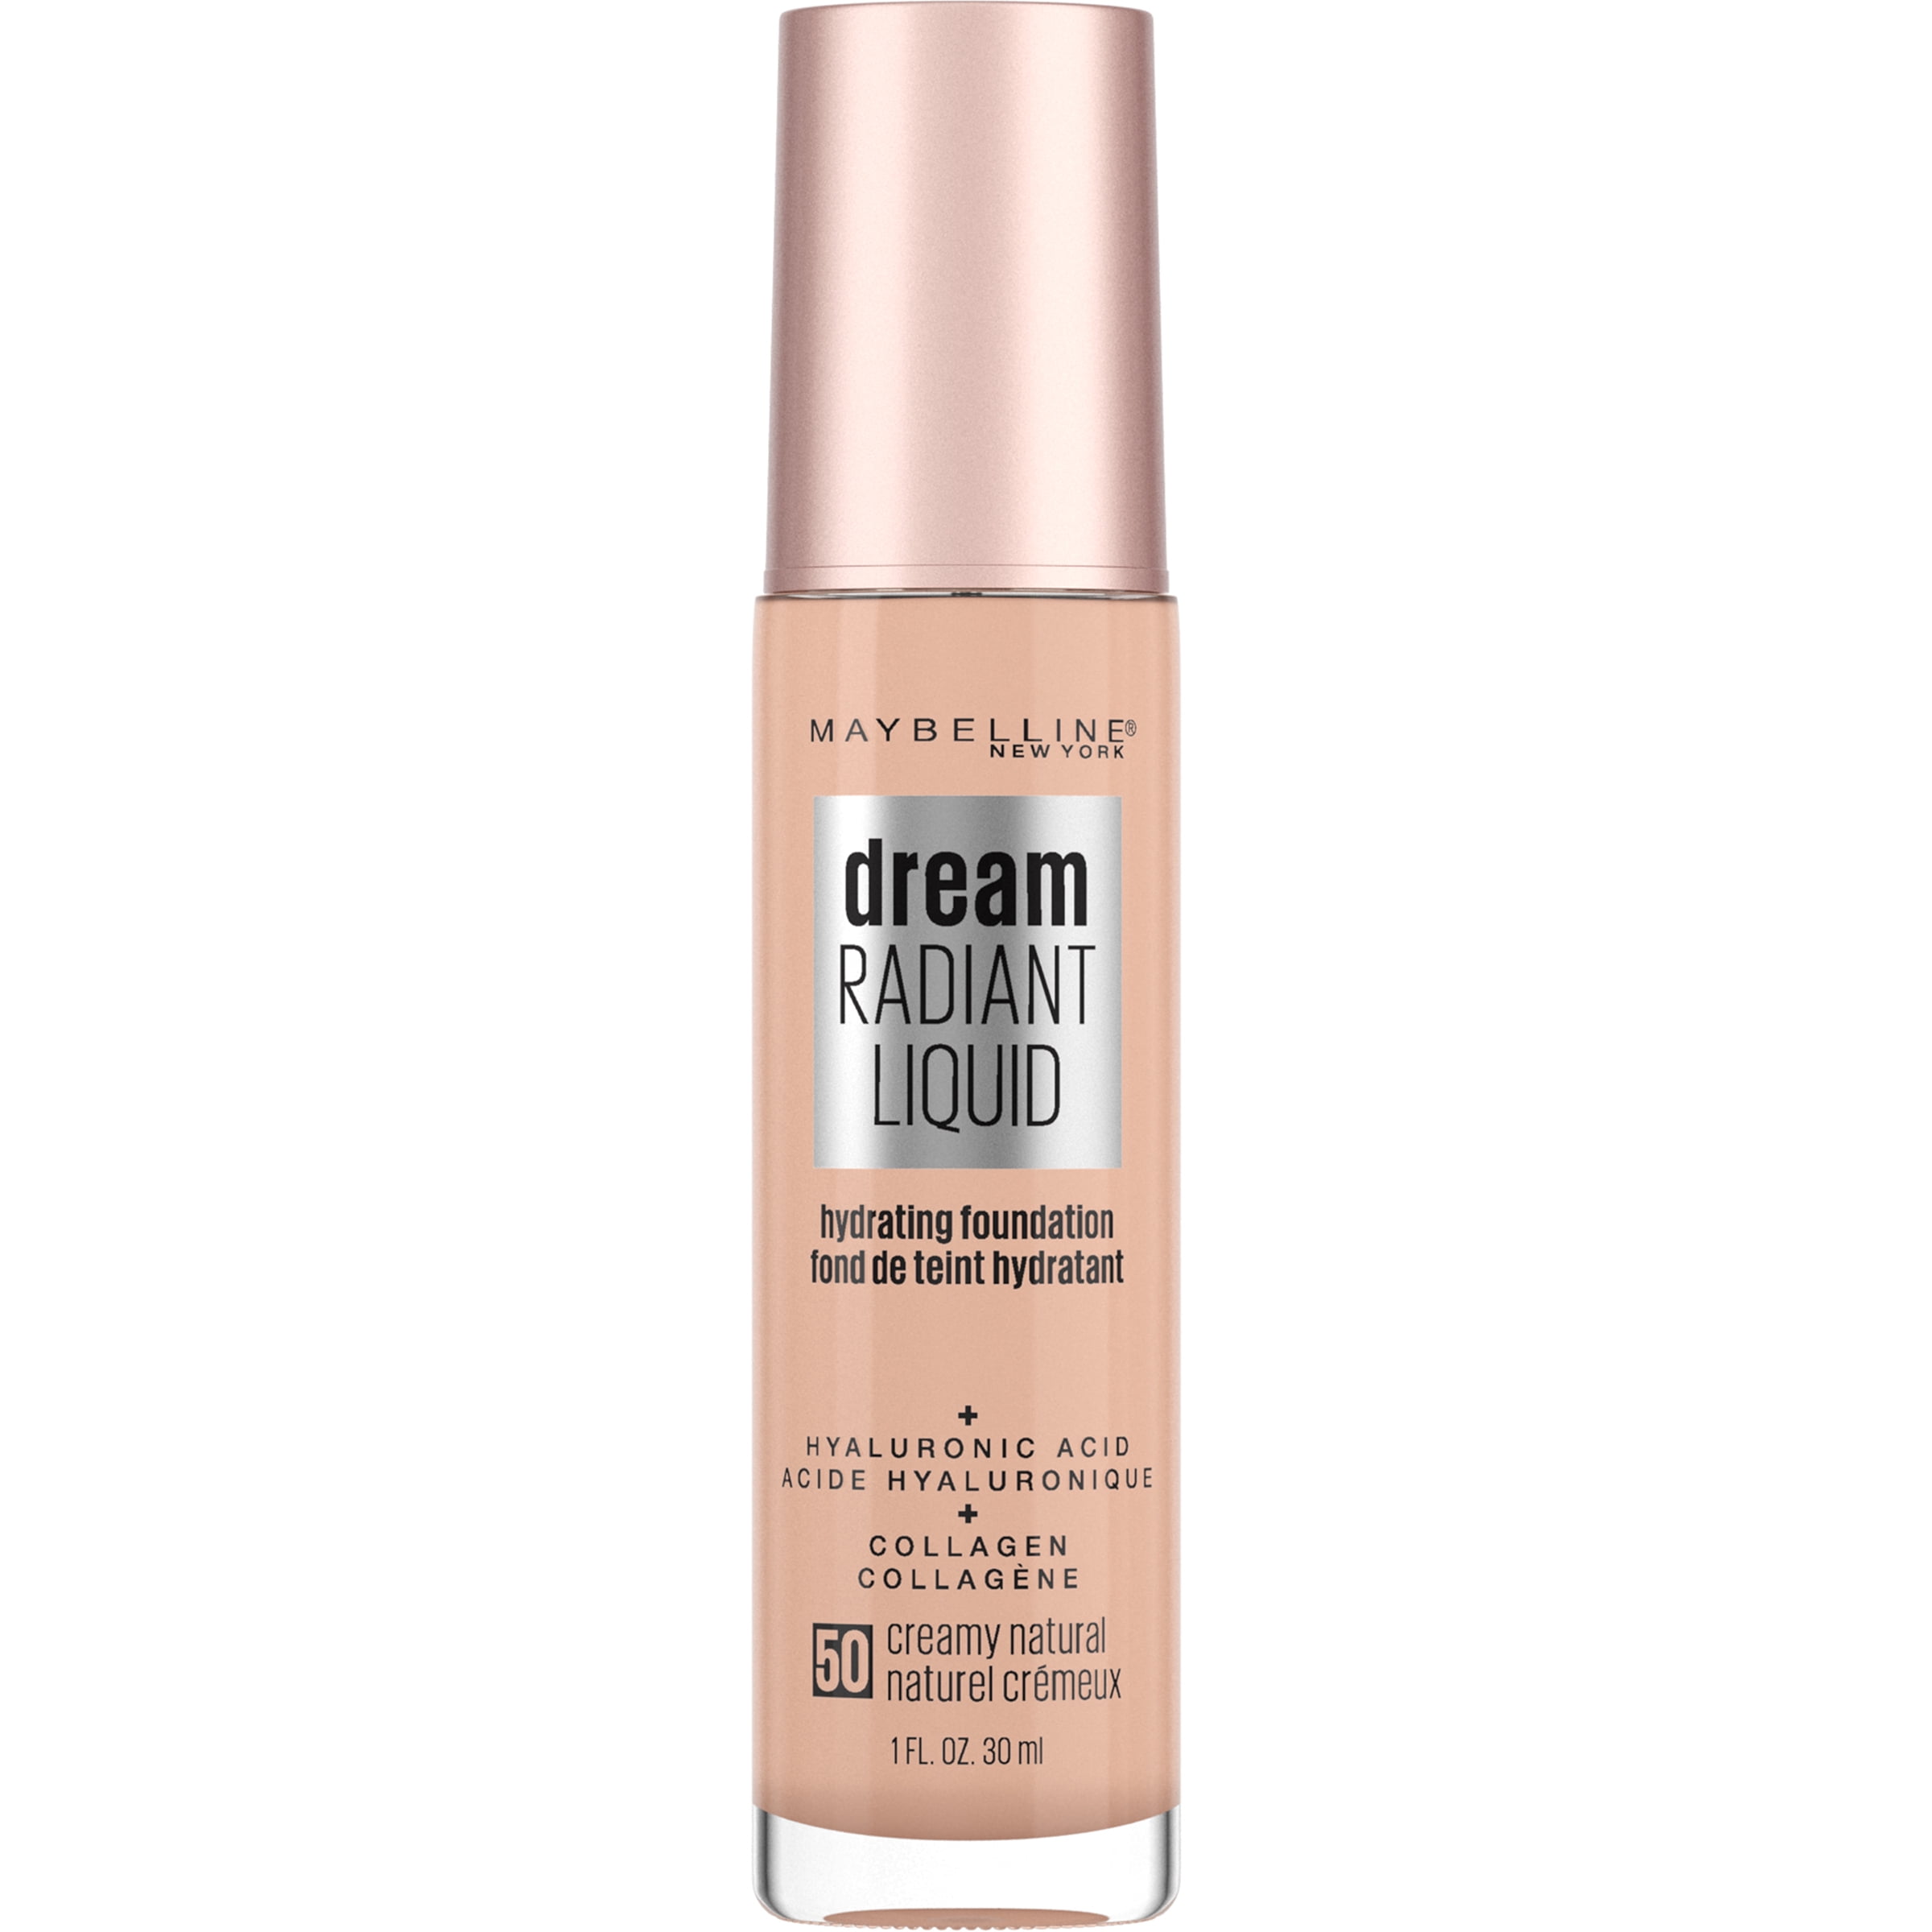 Maybelline Dream Radiant Liquid Foundation Makeup, 50 Creamy Natural, 1 fl oz